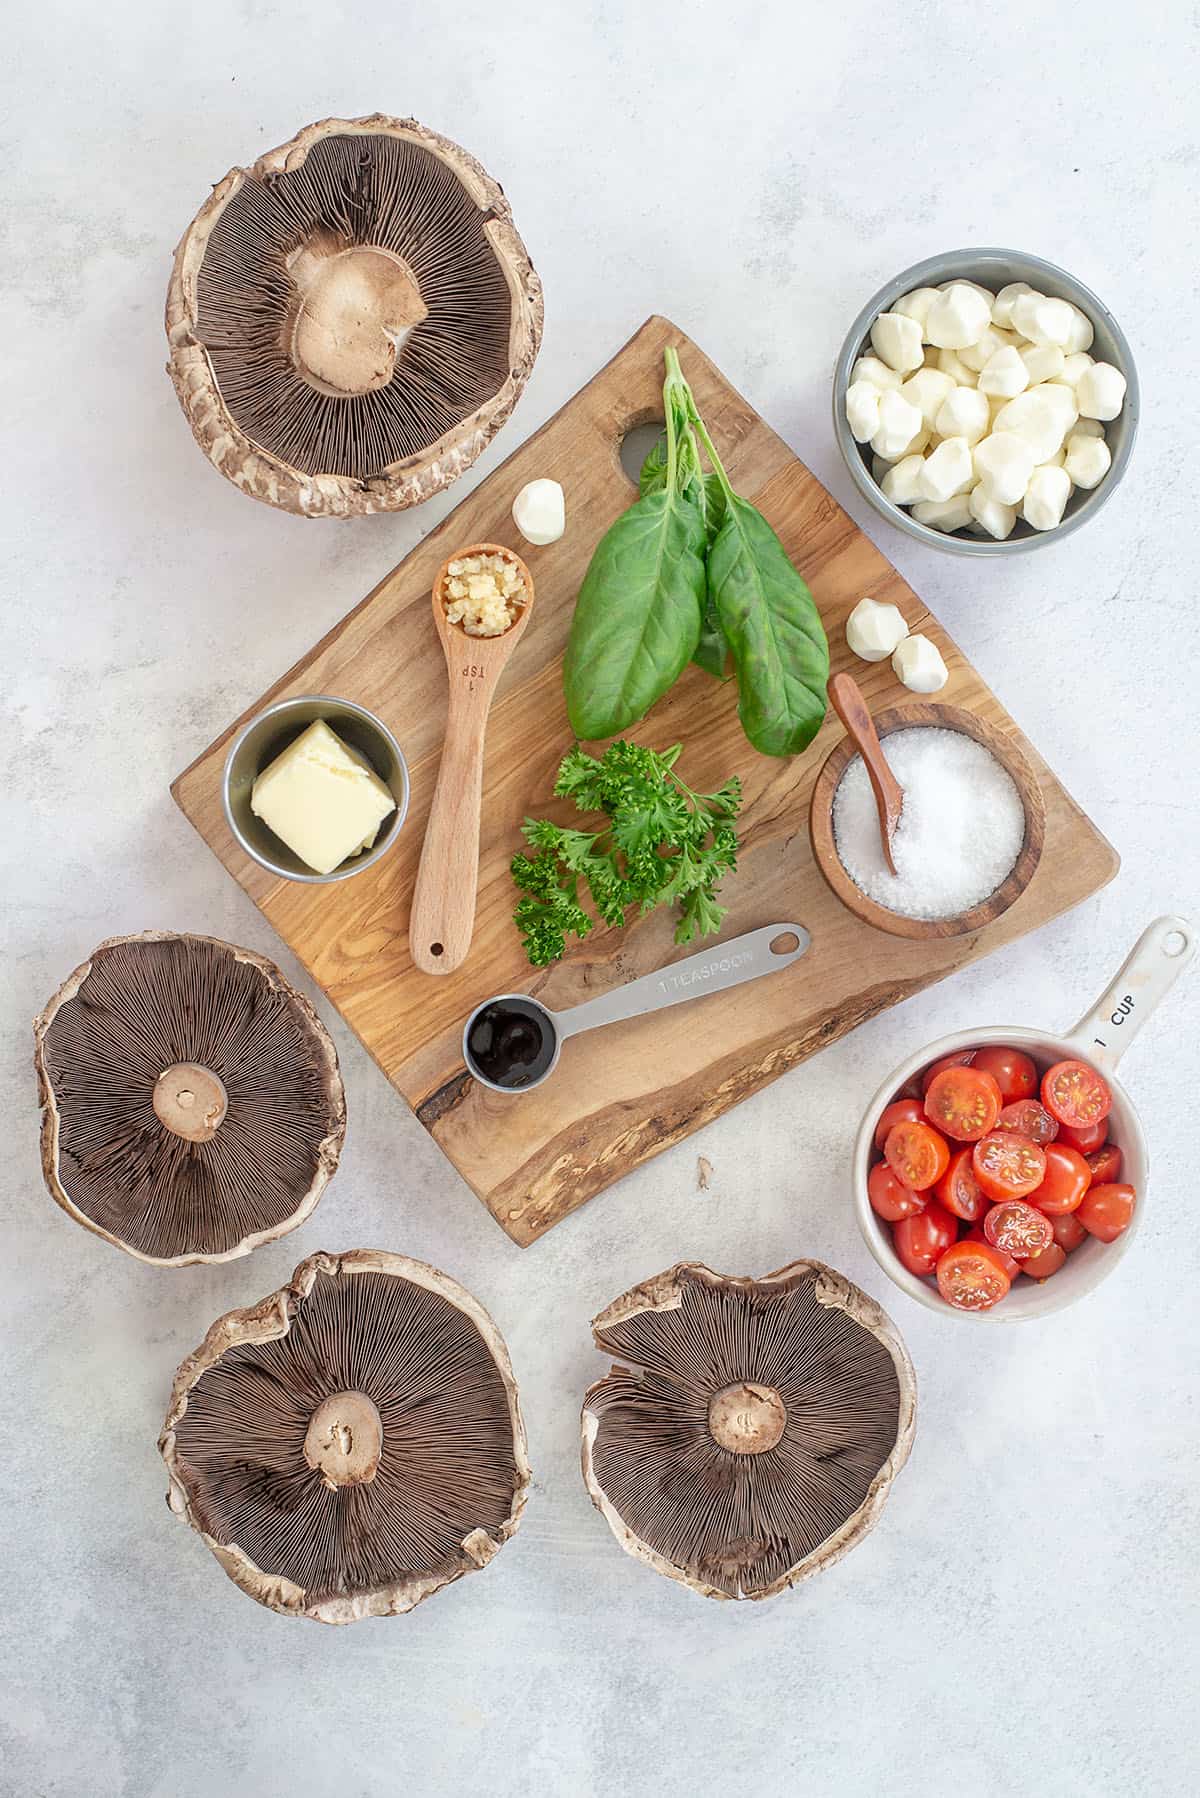 ingredients for caprese stuffed mushrooms.